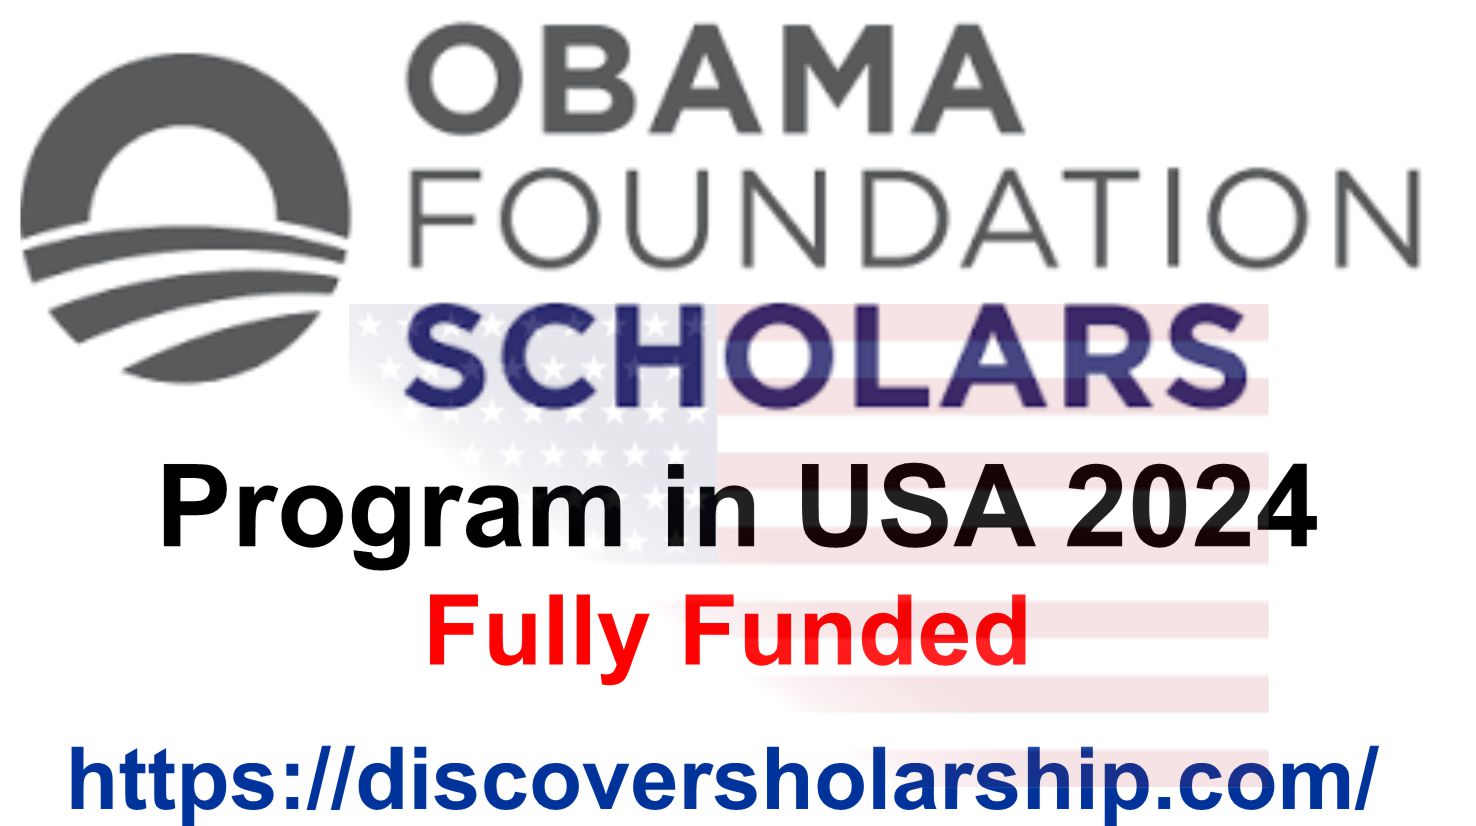 Obama Foundation Scholars Program 2024 in USA (Fully Funded)